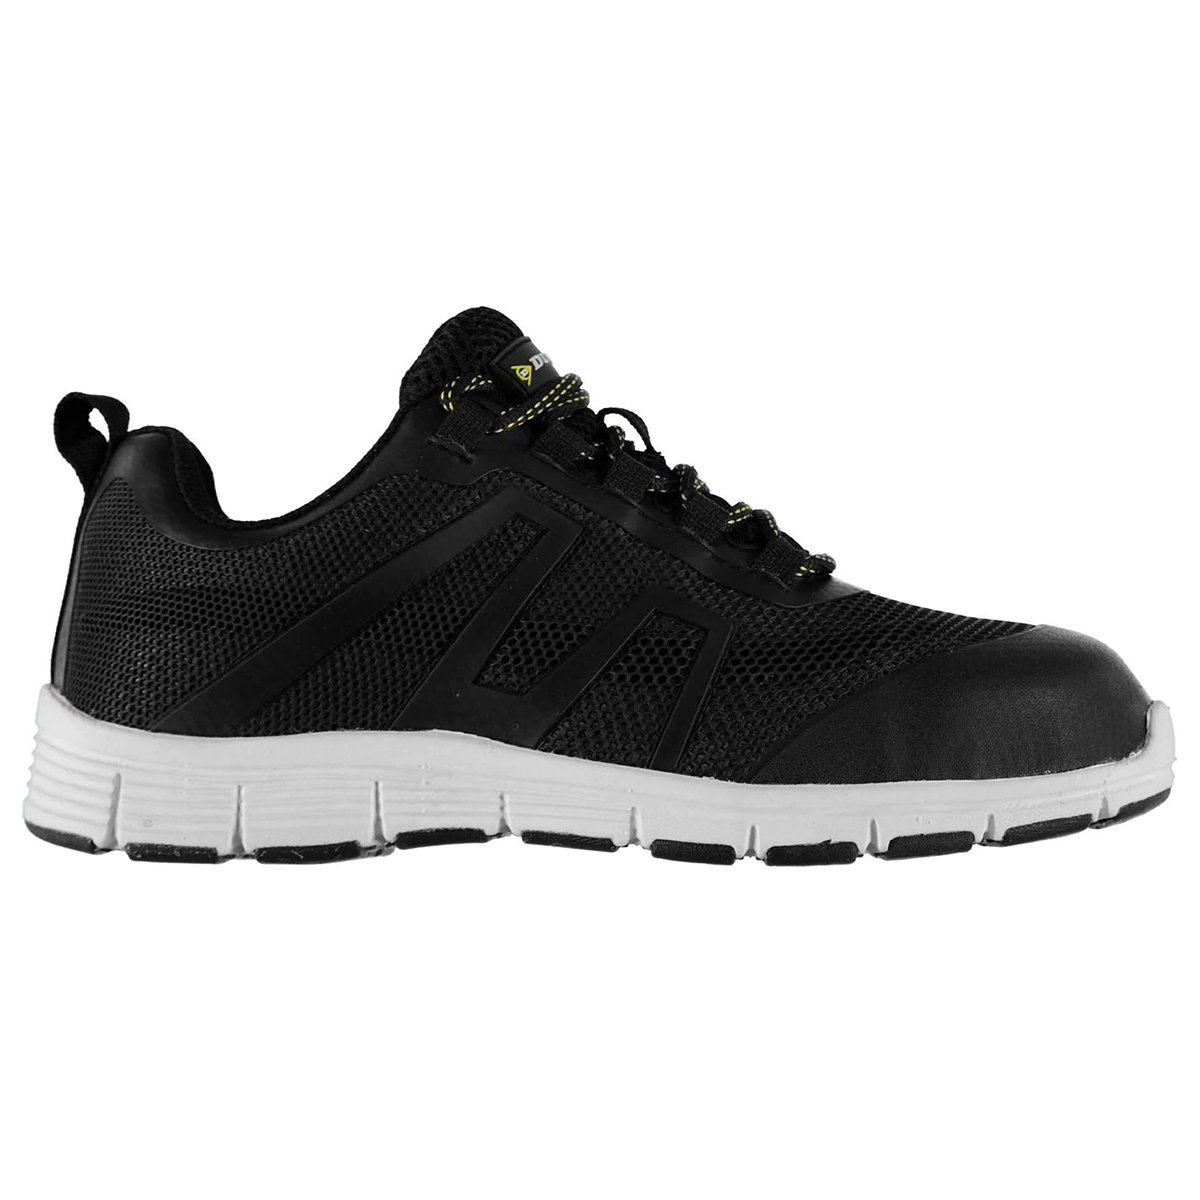 Dunlop Men's Maine Steel Toe Work Shoes - Black, 10.5